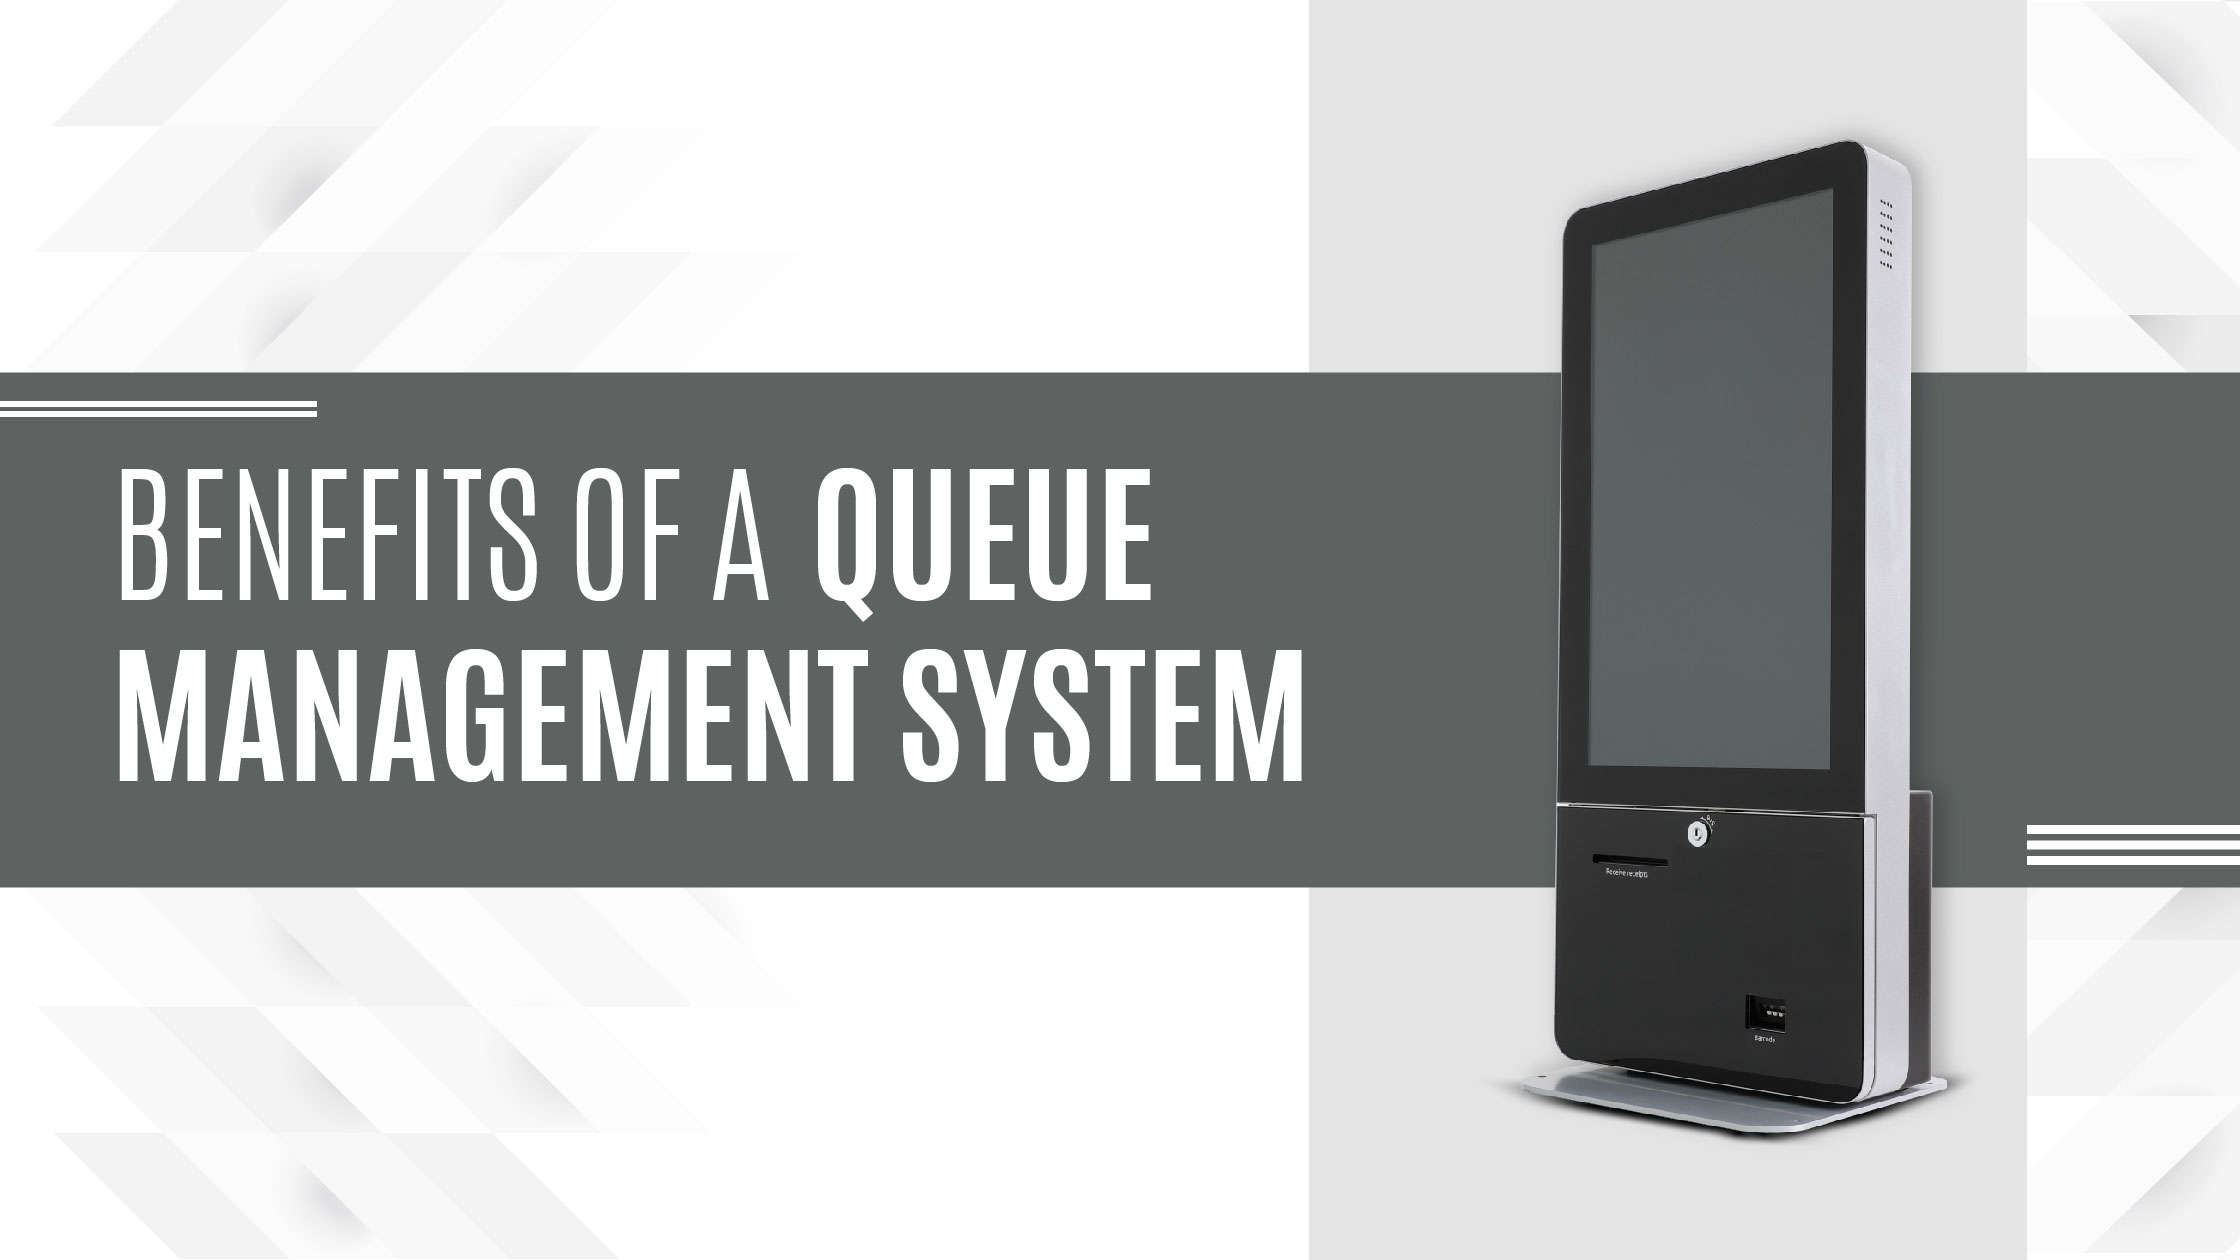 Benefits of a Queue Management System